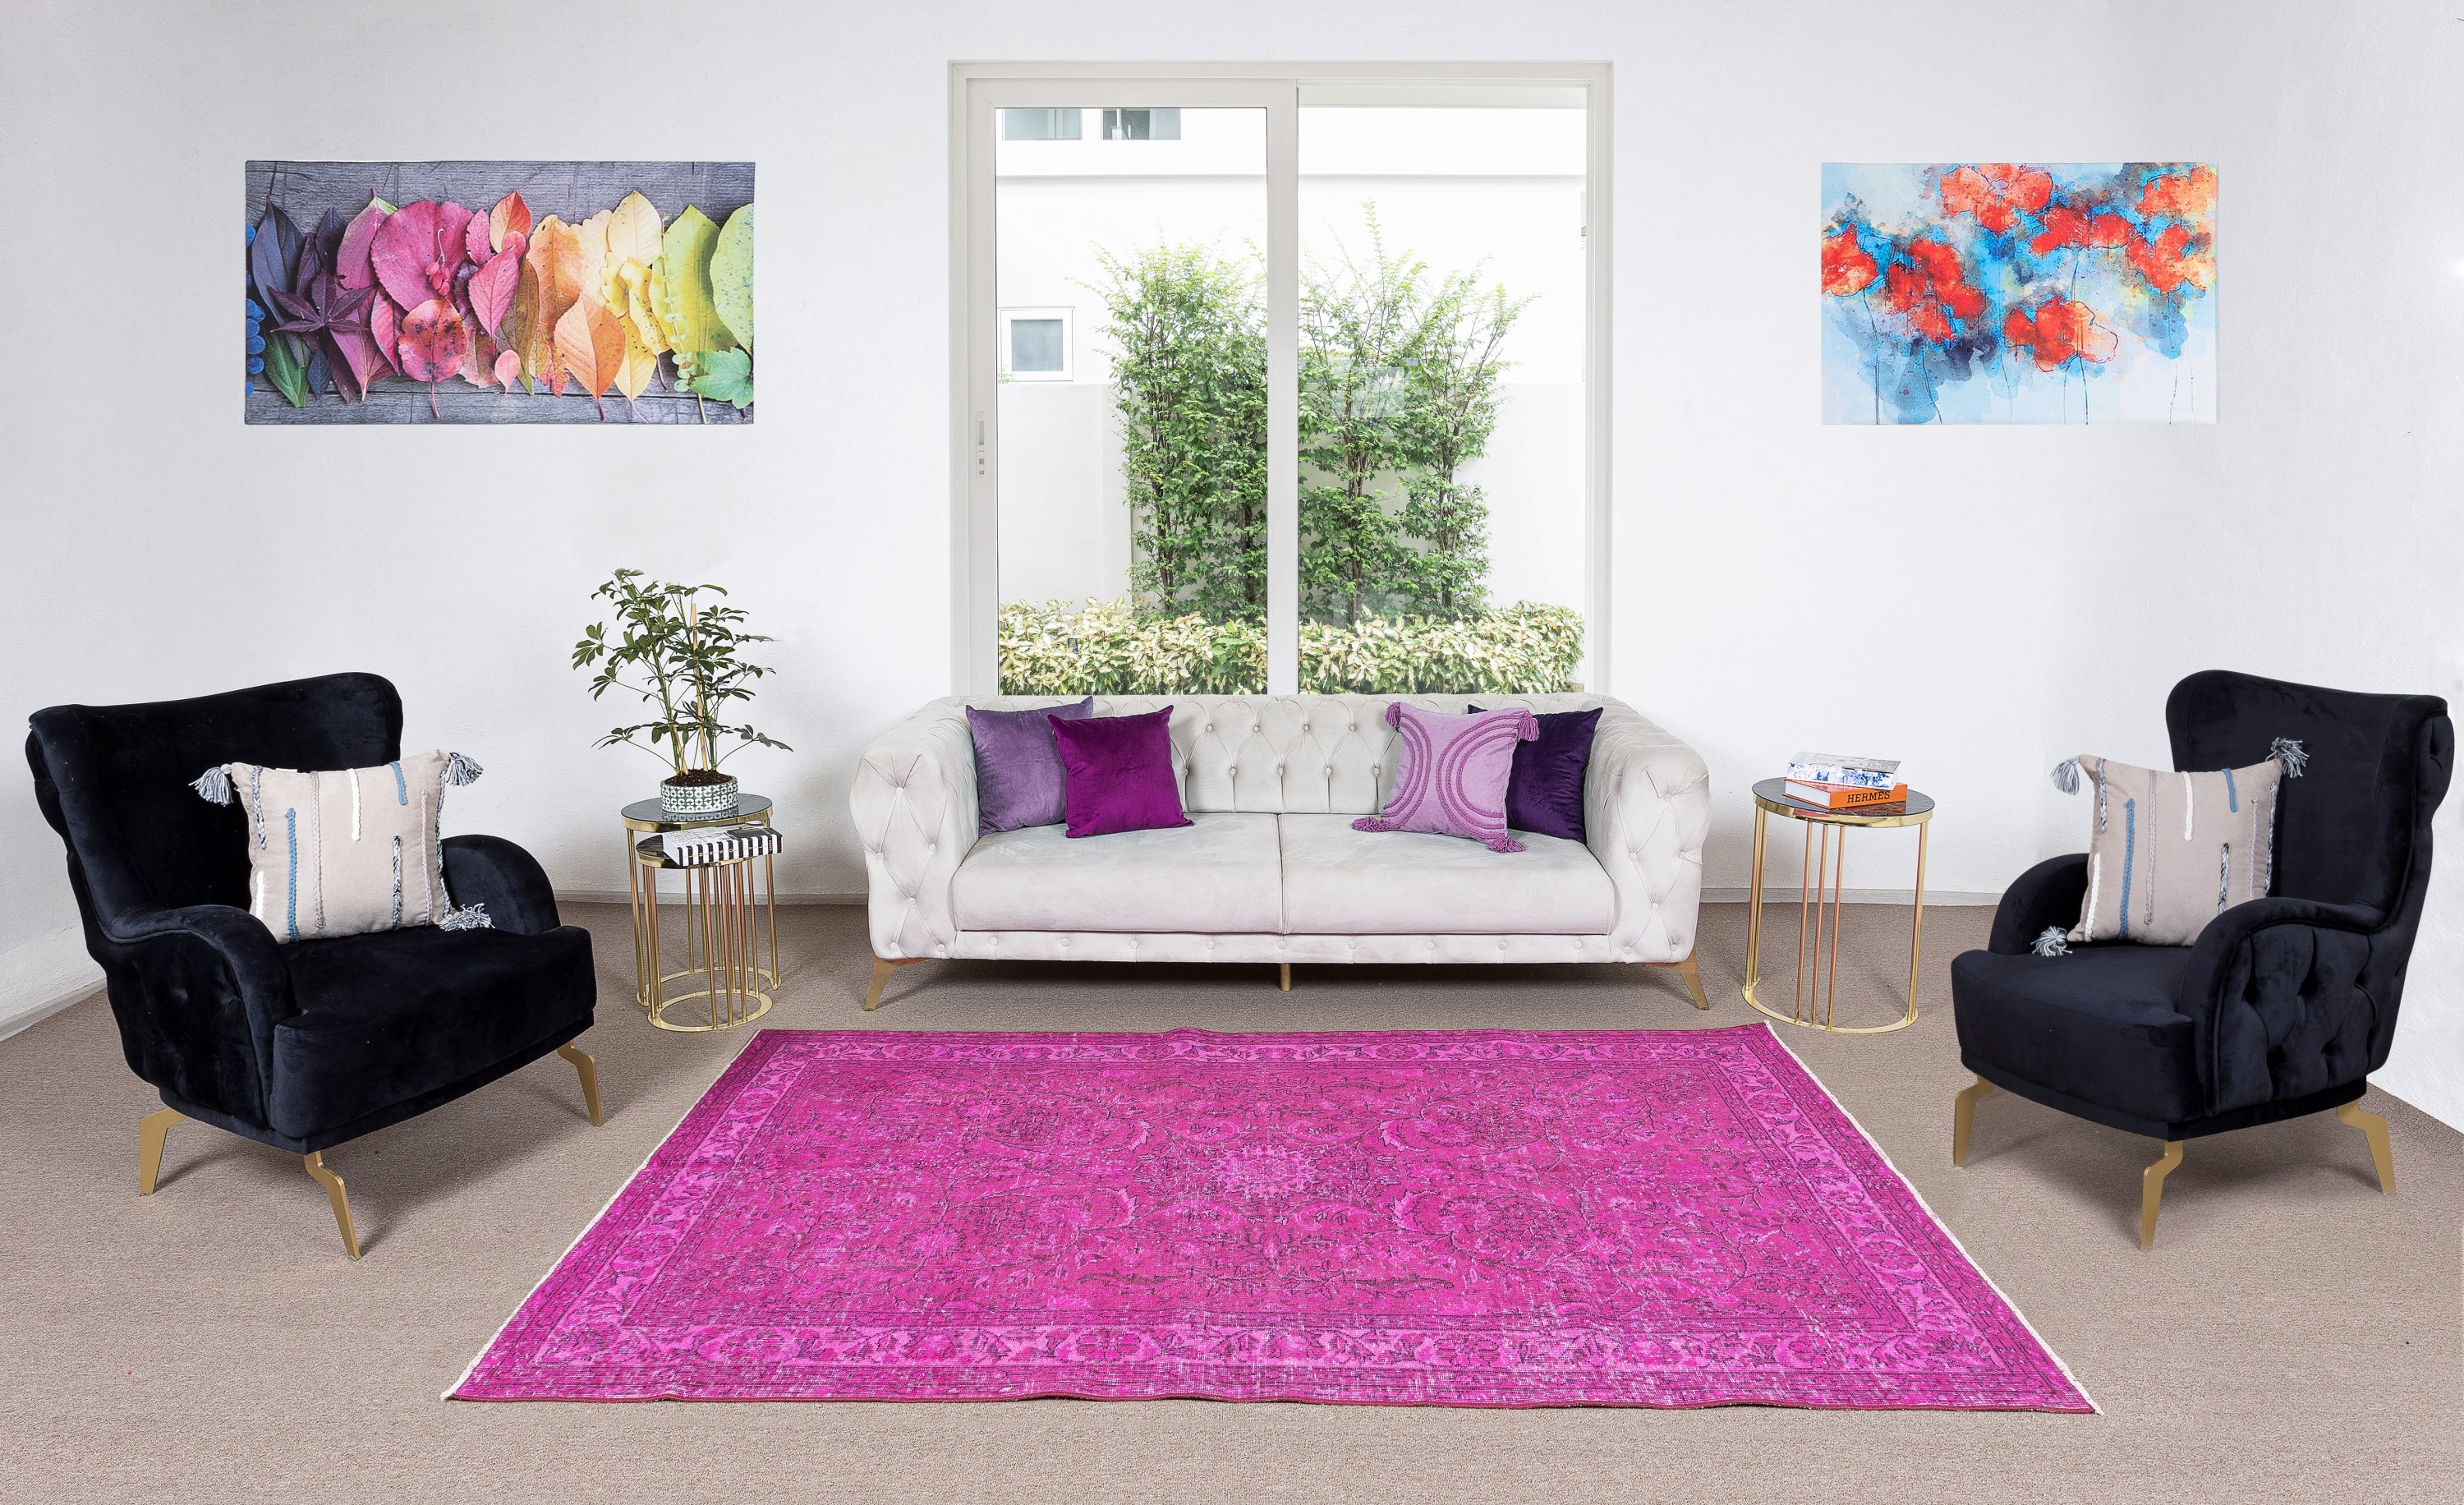 5.3x8.6 Ft Handmade Turkish Decorative Rug in Fuchsia Pink for Modern Interiors (Tapis décoratif turc fait main en rose fuchsia pour les intérieurs modernes)